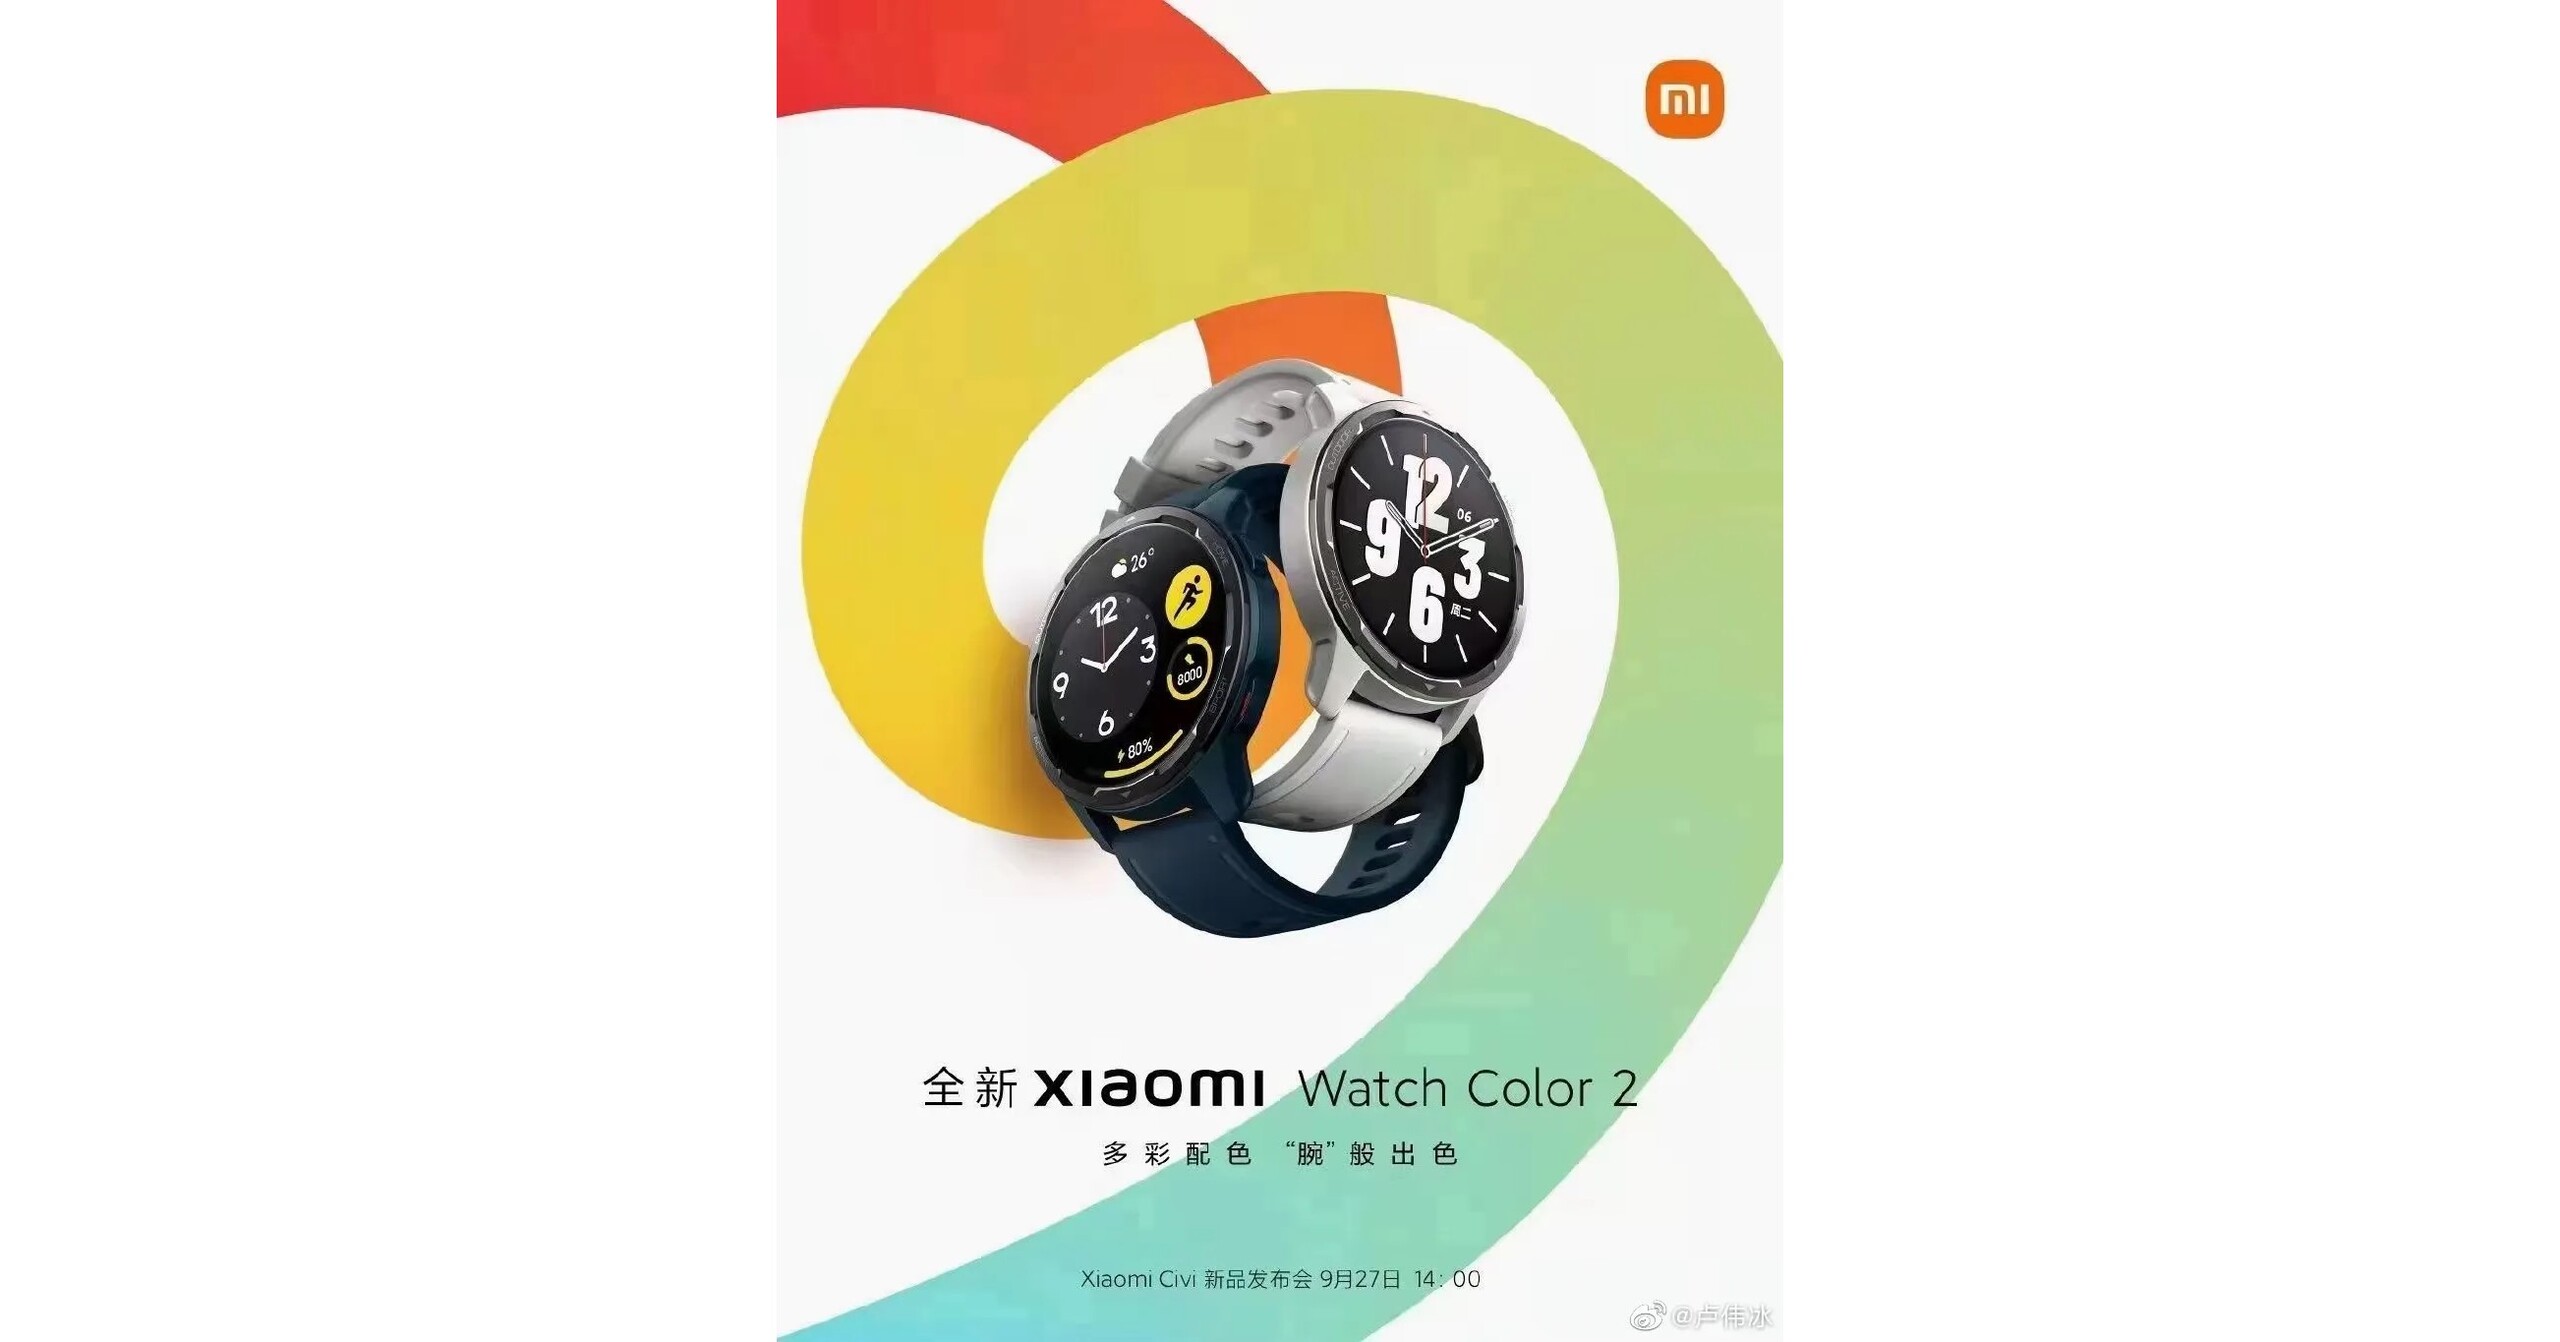 Xiaomi civi price in ksa